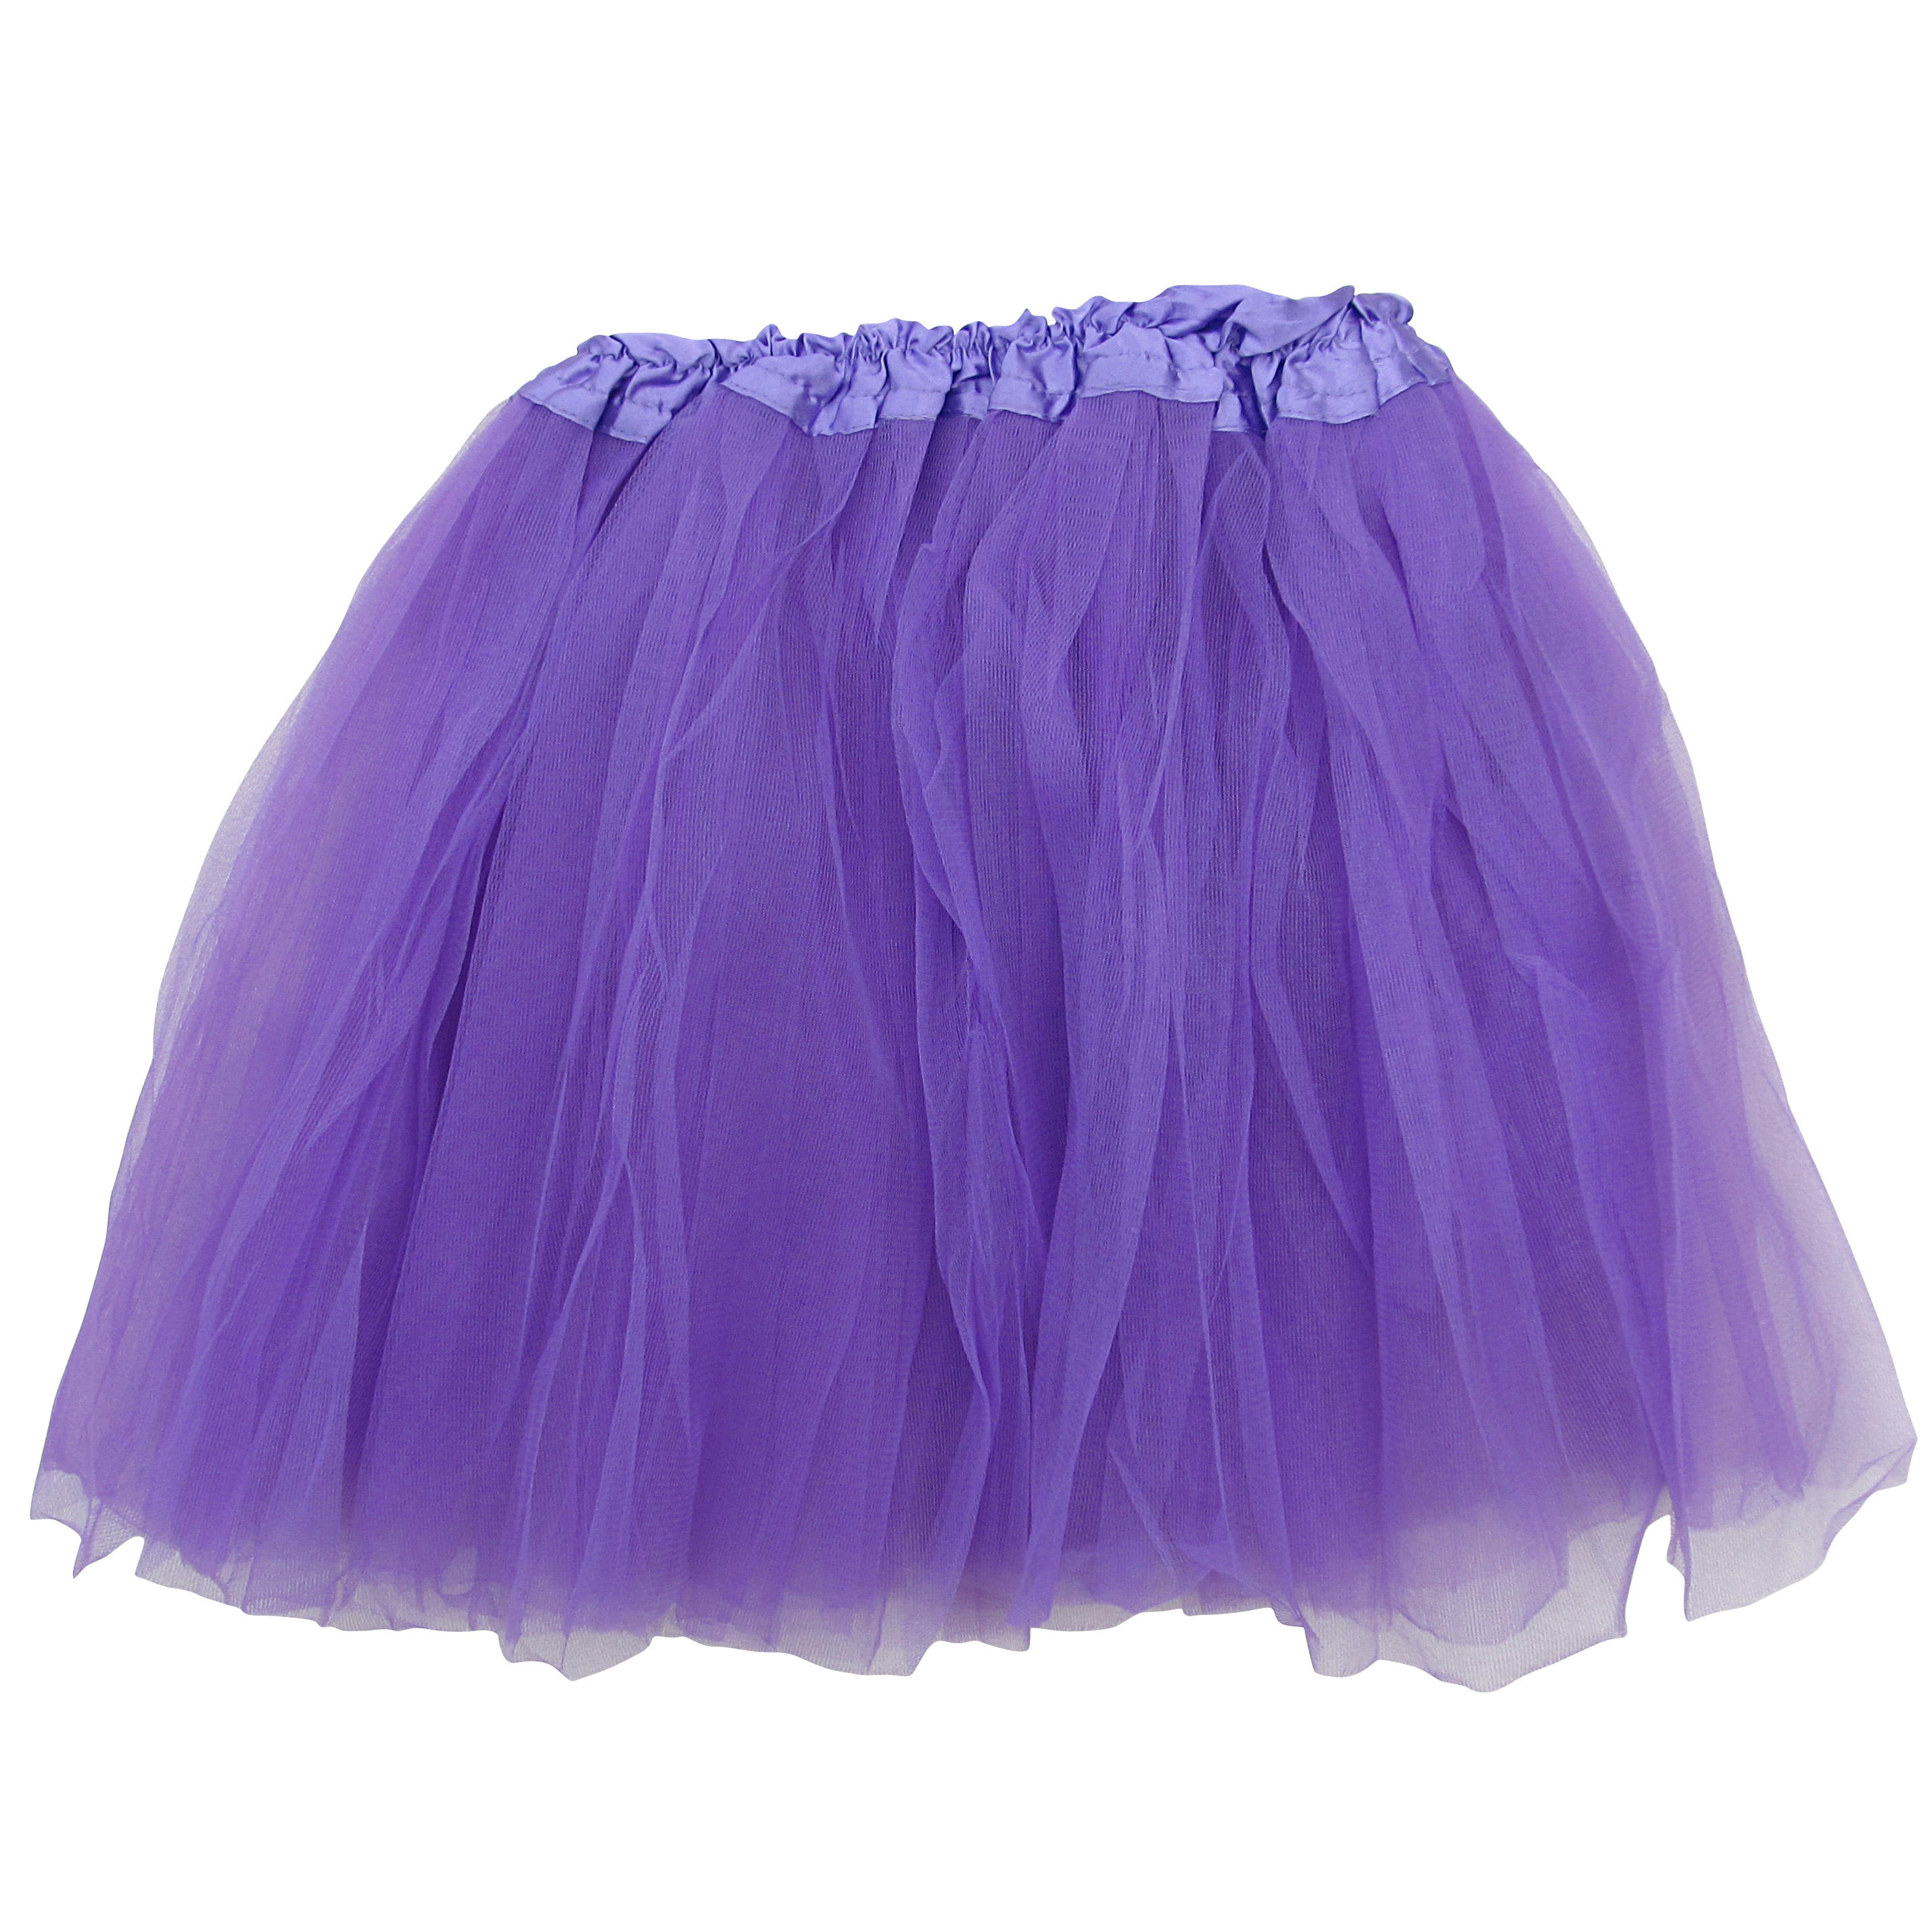 Purple Light Up Tutus Dress Mini Costumes Tutu by Electric Styles 